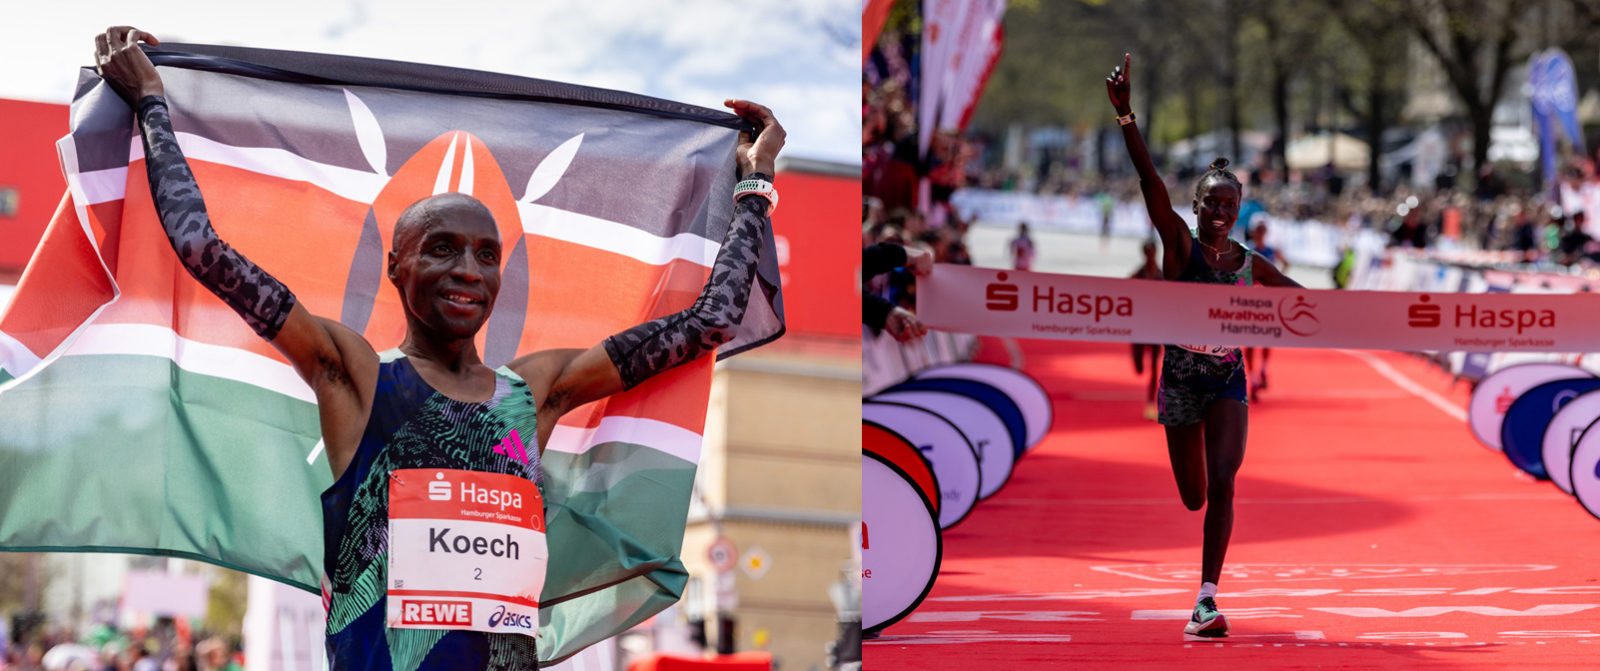 Bernard Koech sets new course record – Dorcas Tuitoek runs second fastest Hamburg time